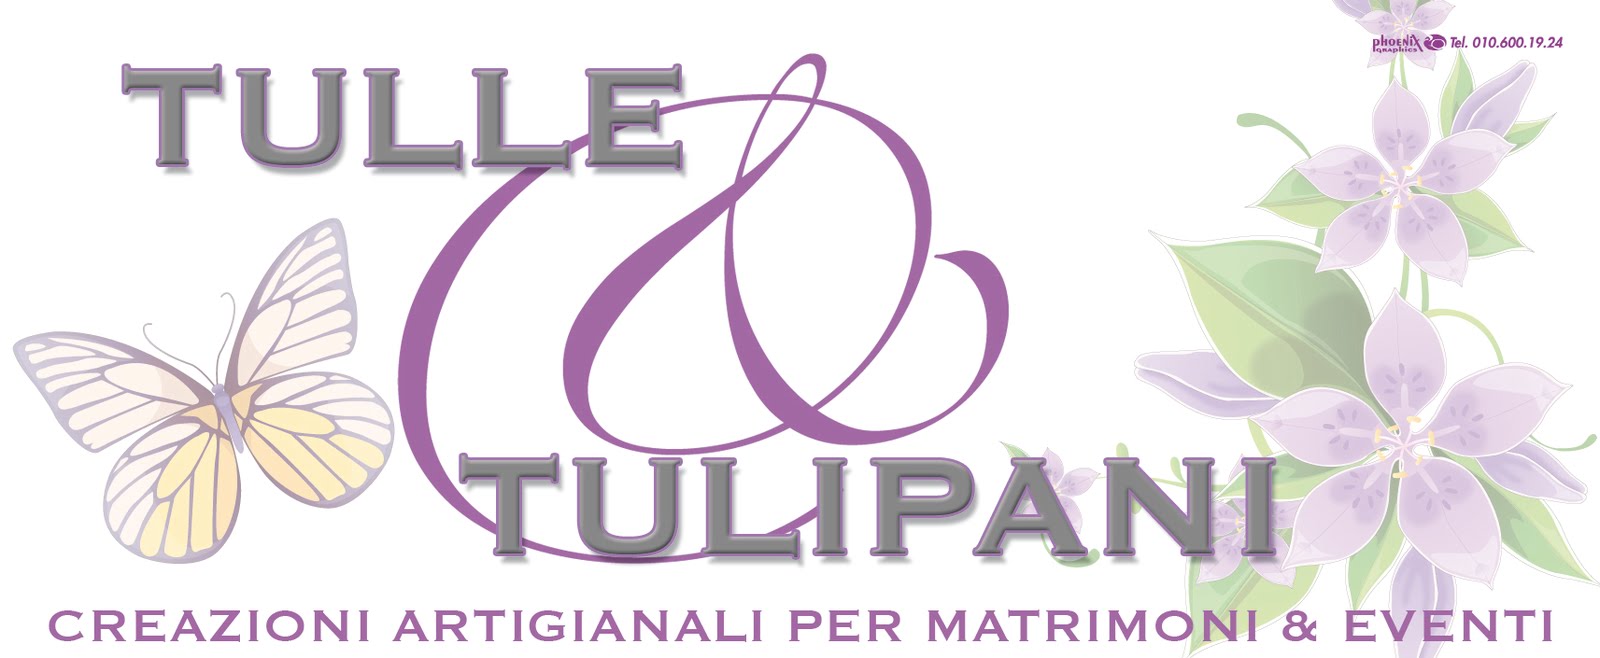 Tulle e Tulipani weddings ands events designer